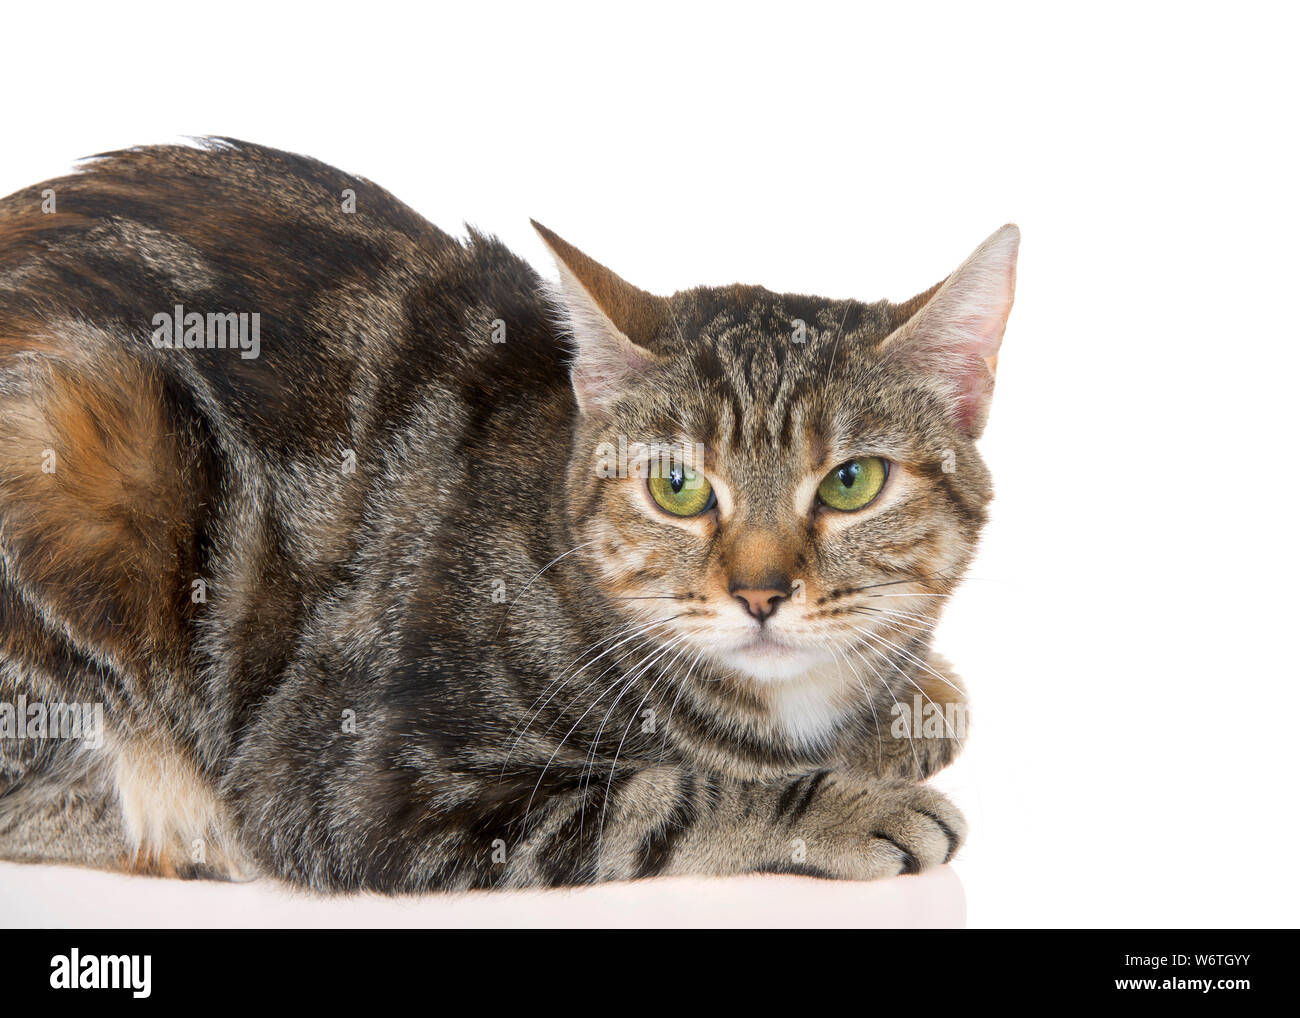 Bengal mix cat -Fotos und -Bildmaterial in hoher Auflösung – Alamy